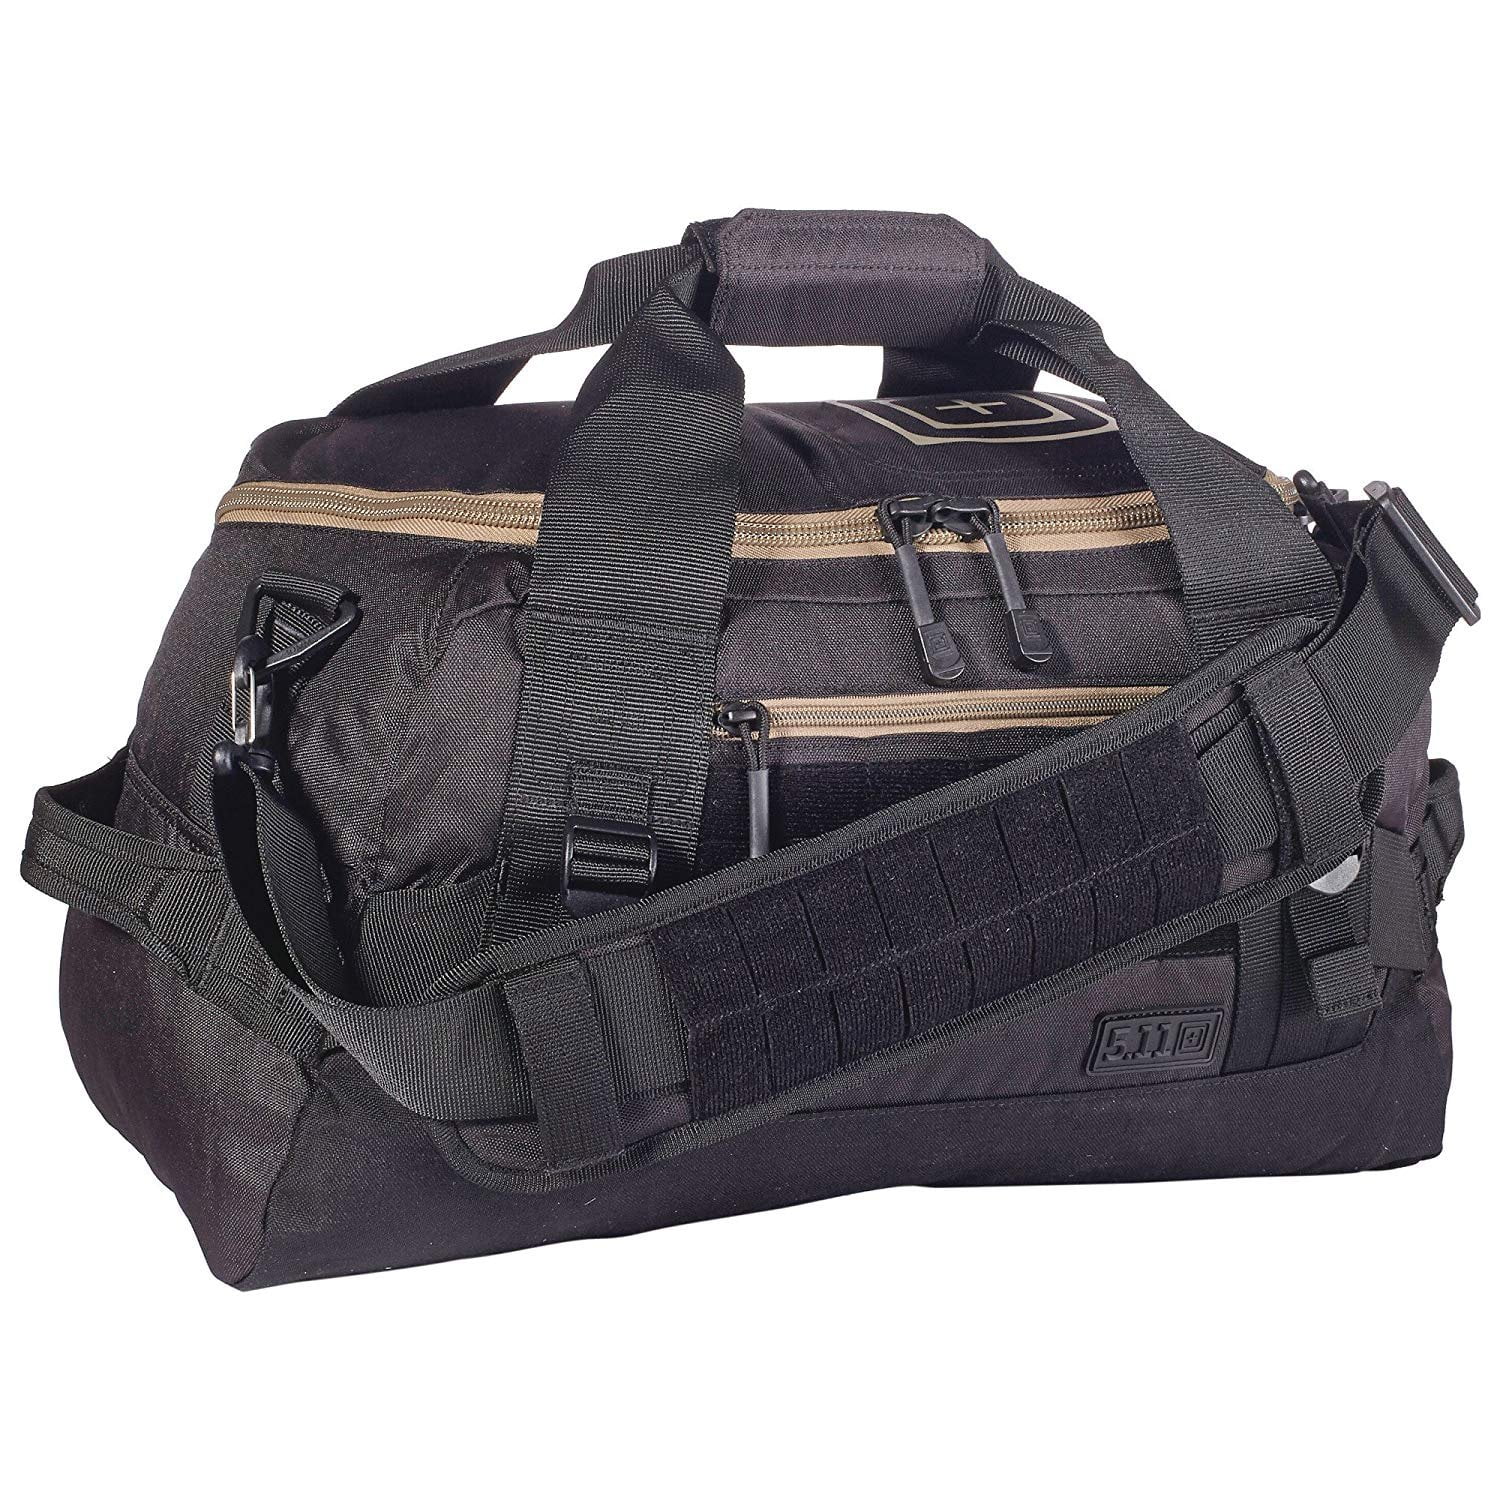 5.11 NBT MIKE Tactical Duffle Bag, Small, Style 56183, Black - Walmart.com